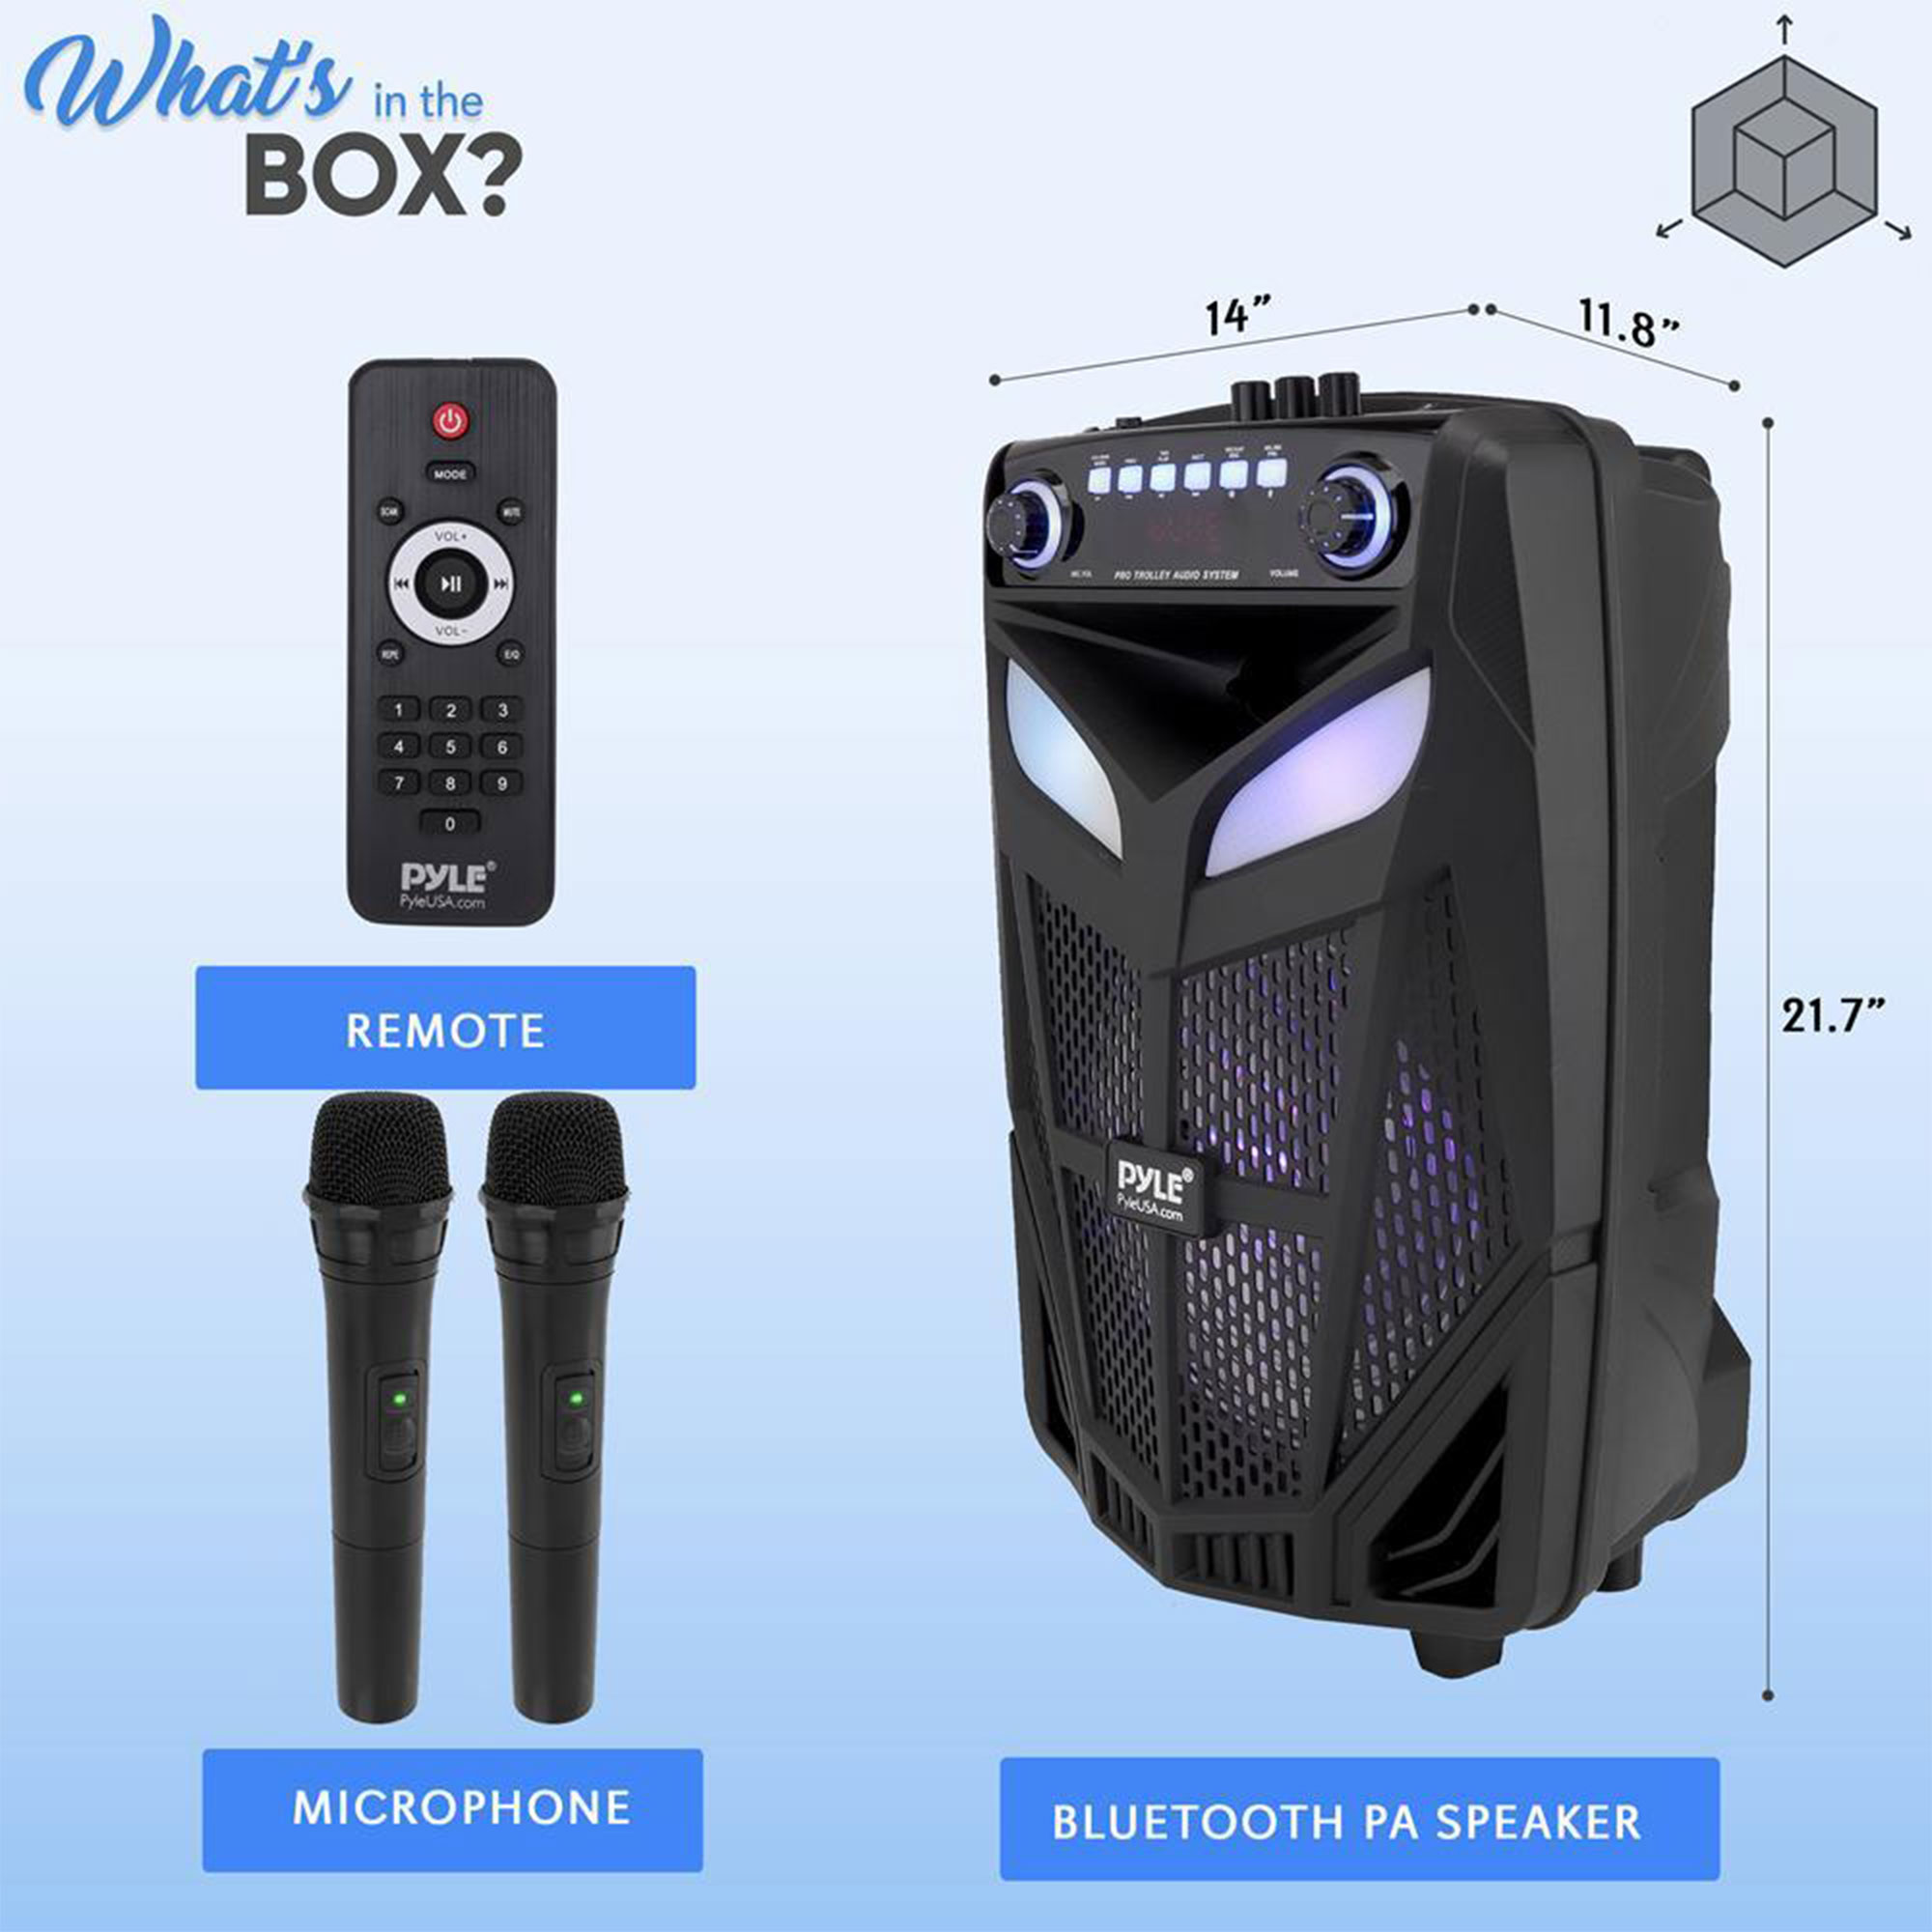 Pyle Multi Purpose 600 Watt Bluetooth Boombox Speaker System w/ LED Lights 